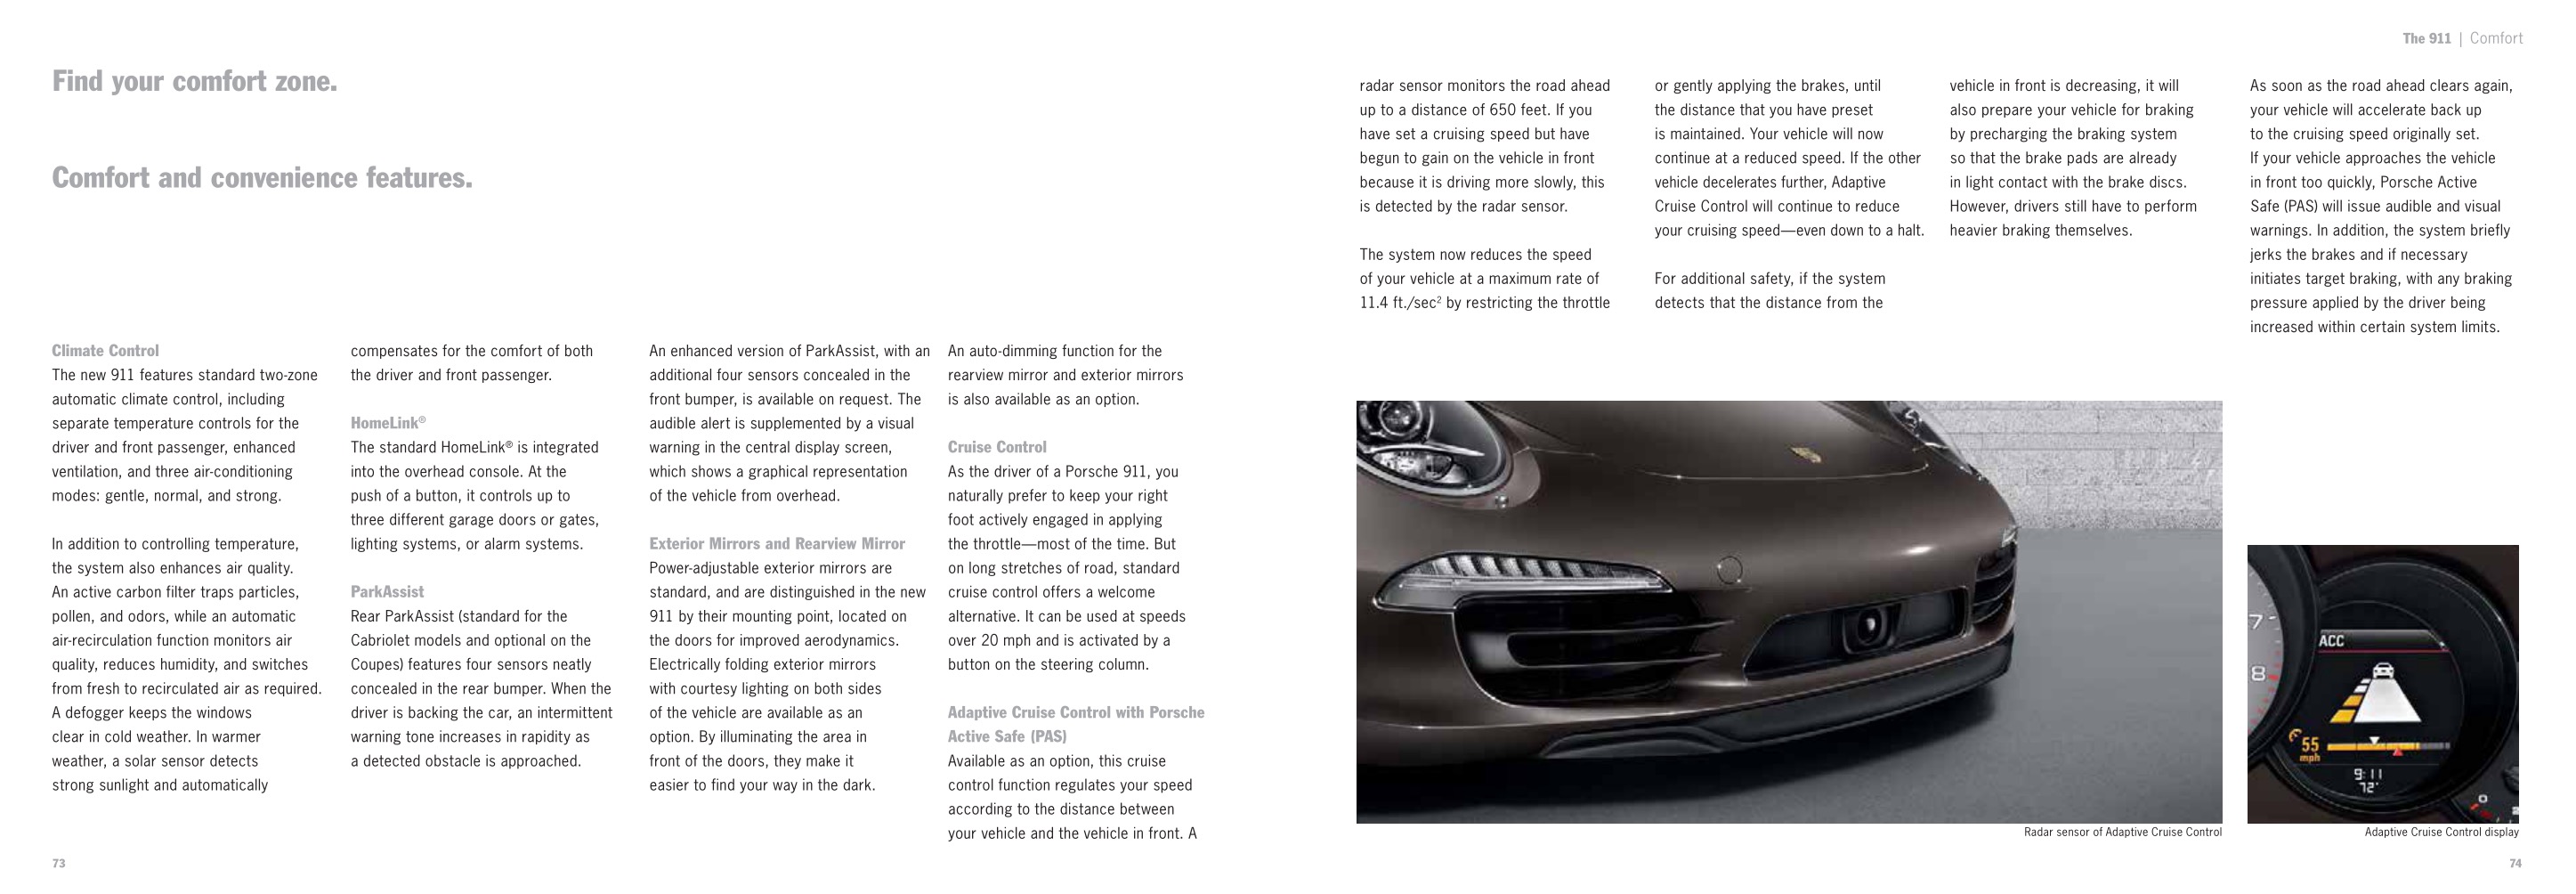 2013 Porsche 911 Brochure Page 49